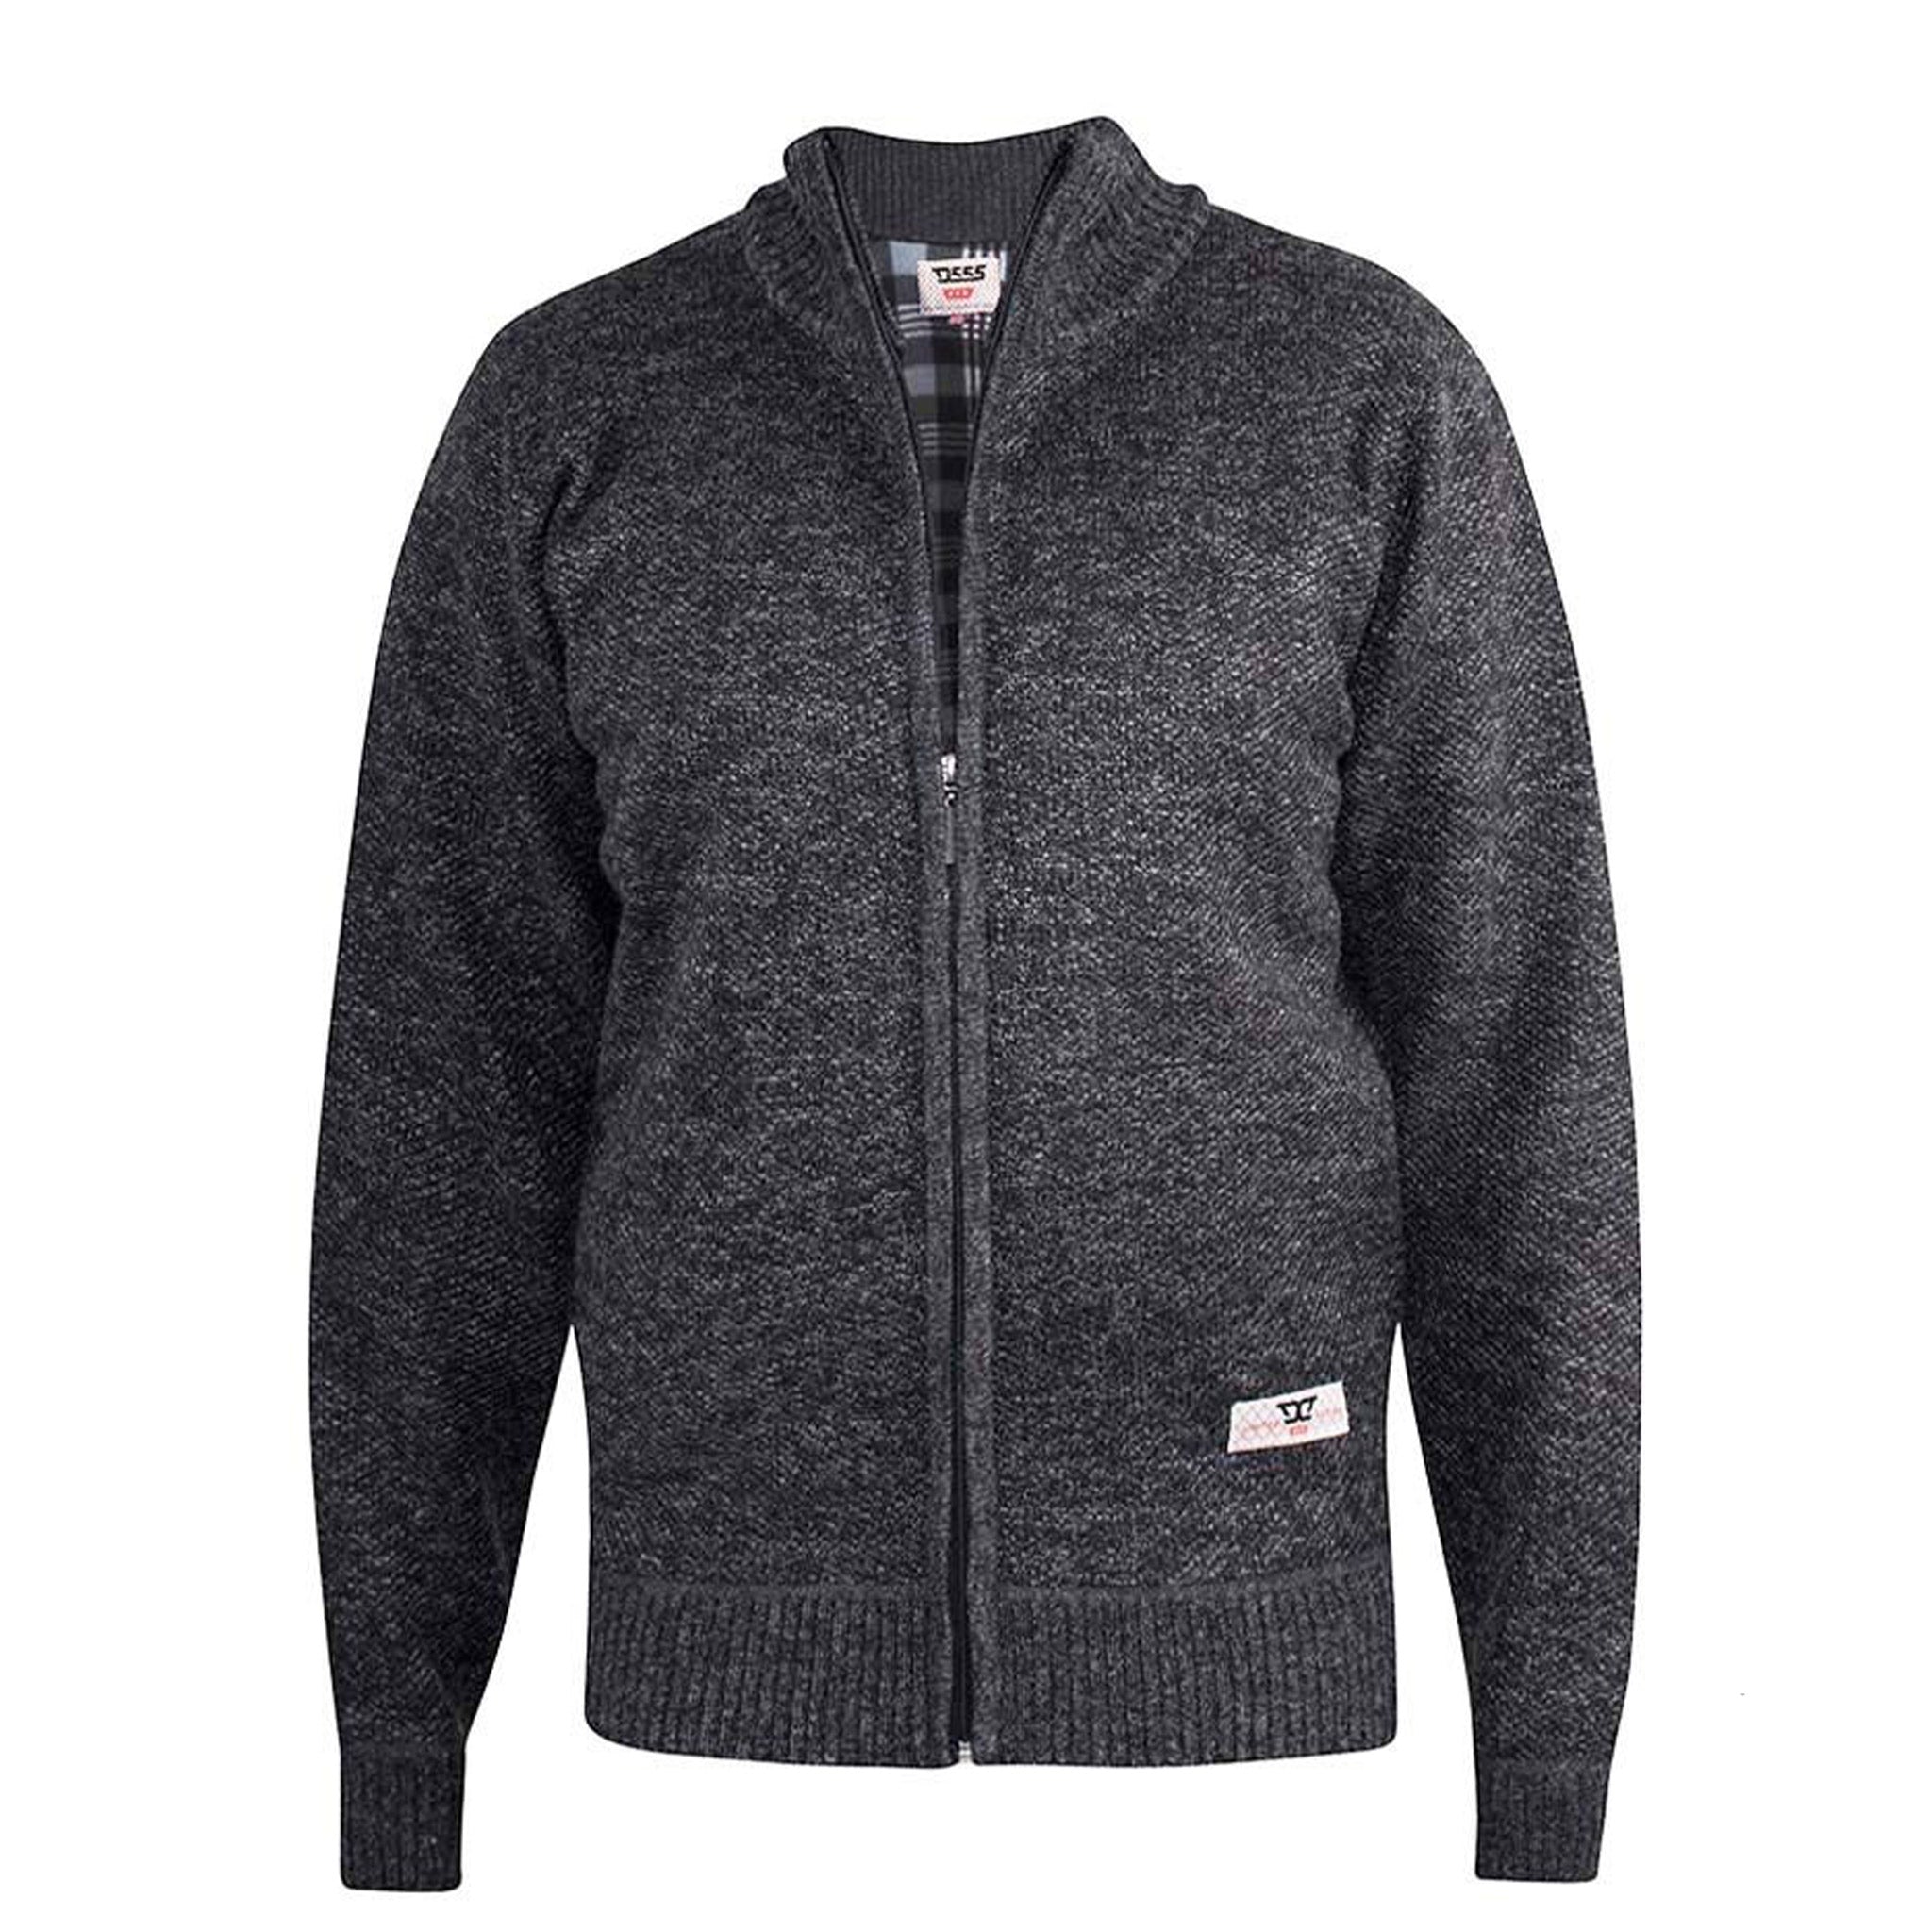 D555 Full Zip Sweater - Black Marl